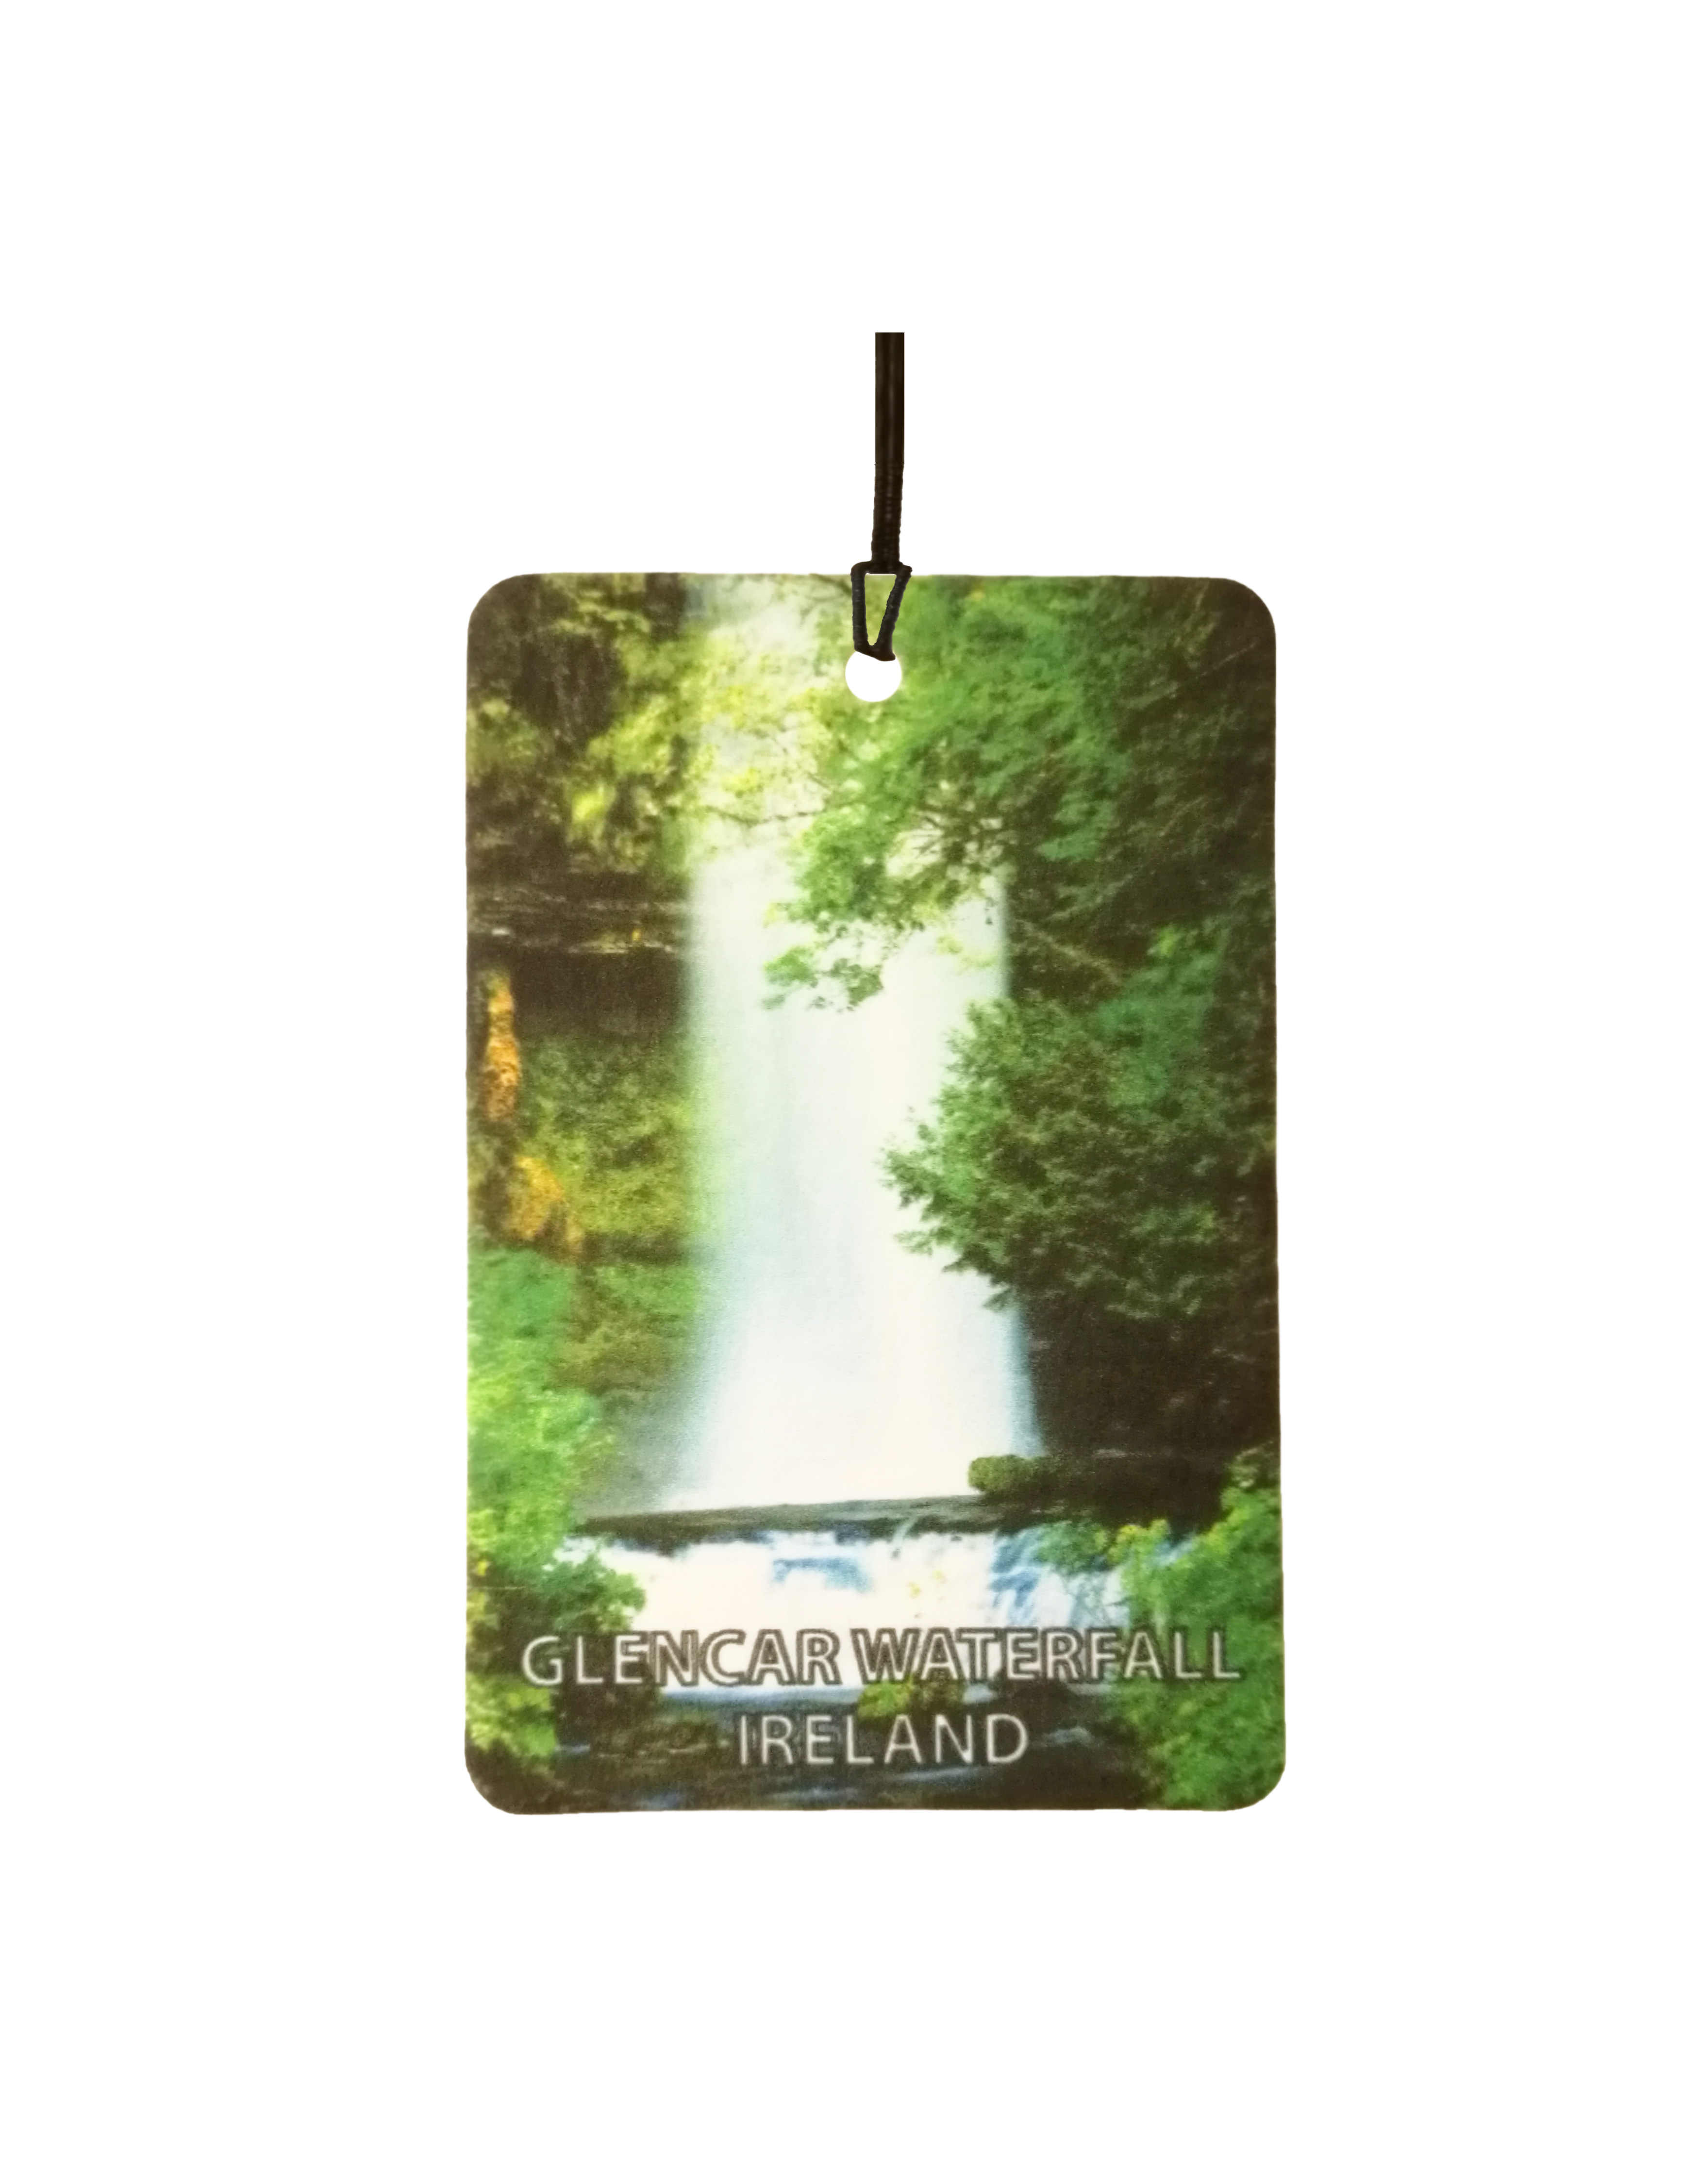 Glencar Waterfall - Ireland